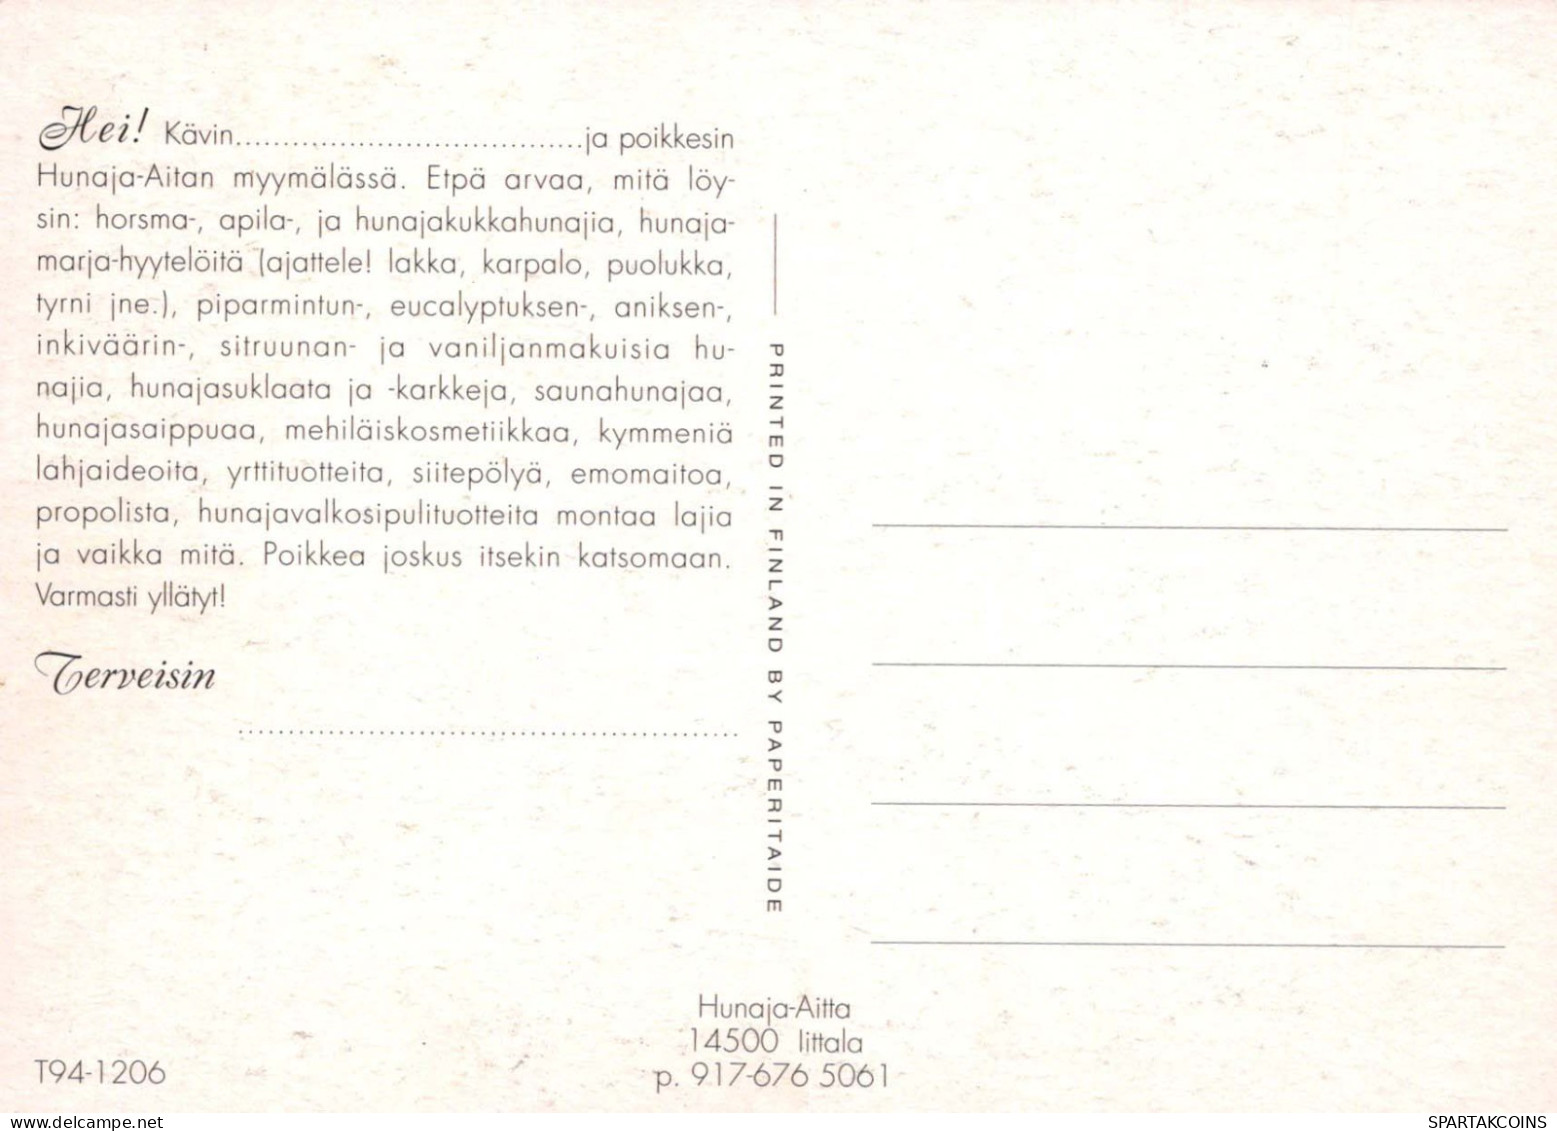 FLORES Vintage Tarjeta Postal CPSM #PBZ095.ES - Blumen